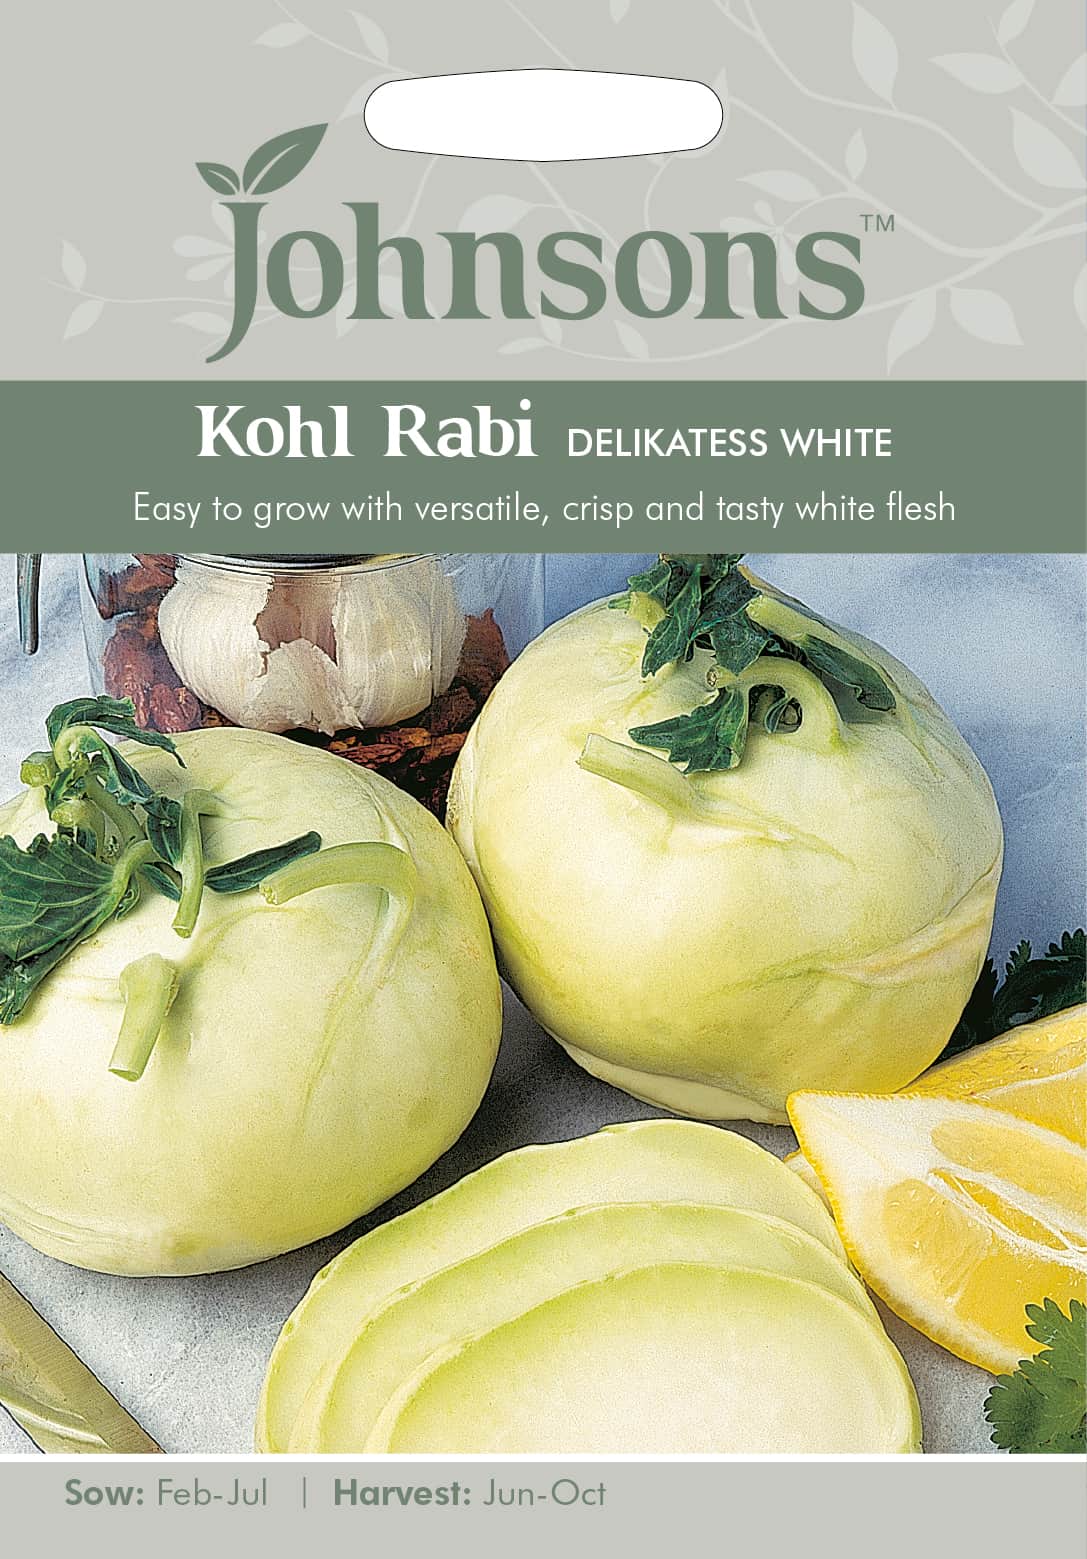 klrabbi-delikatess-white-1